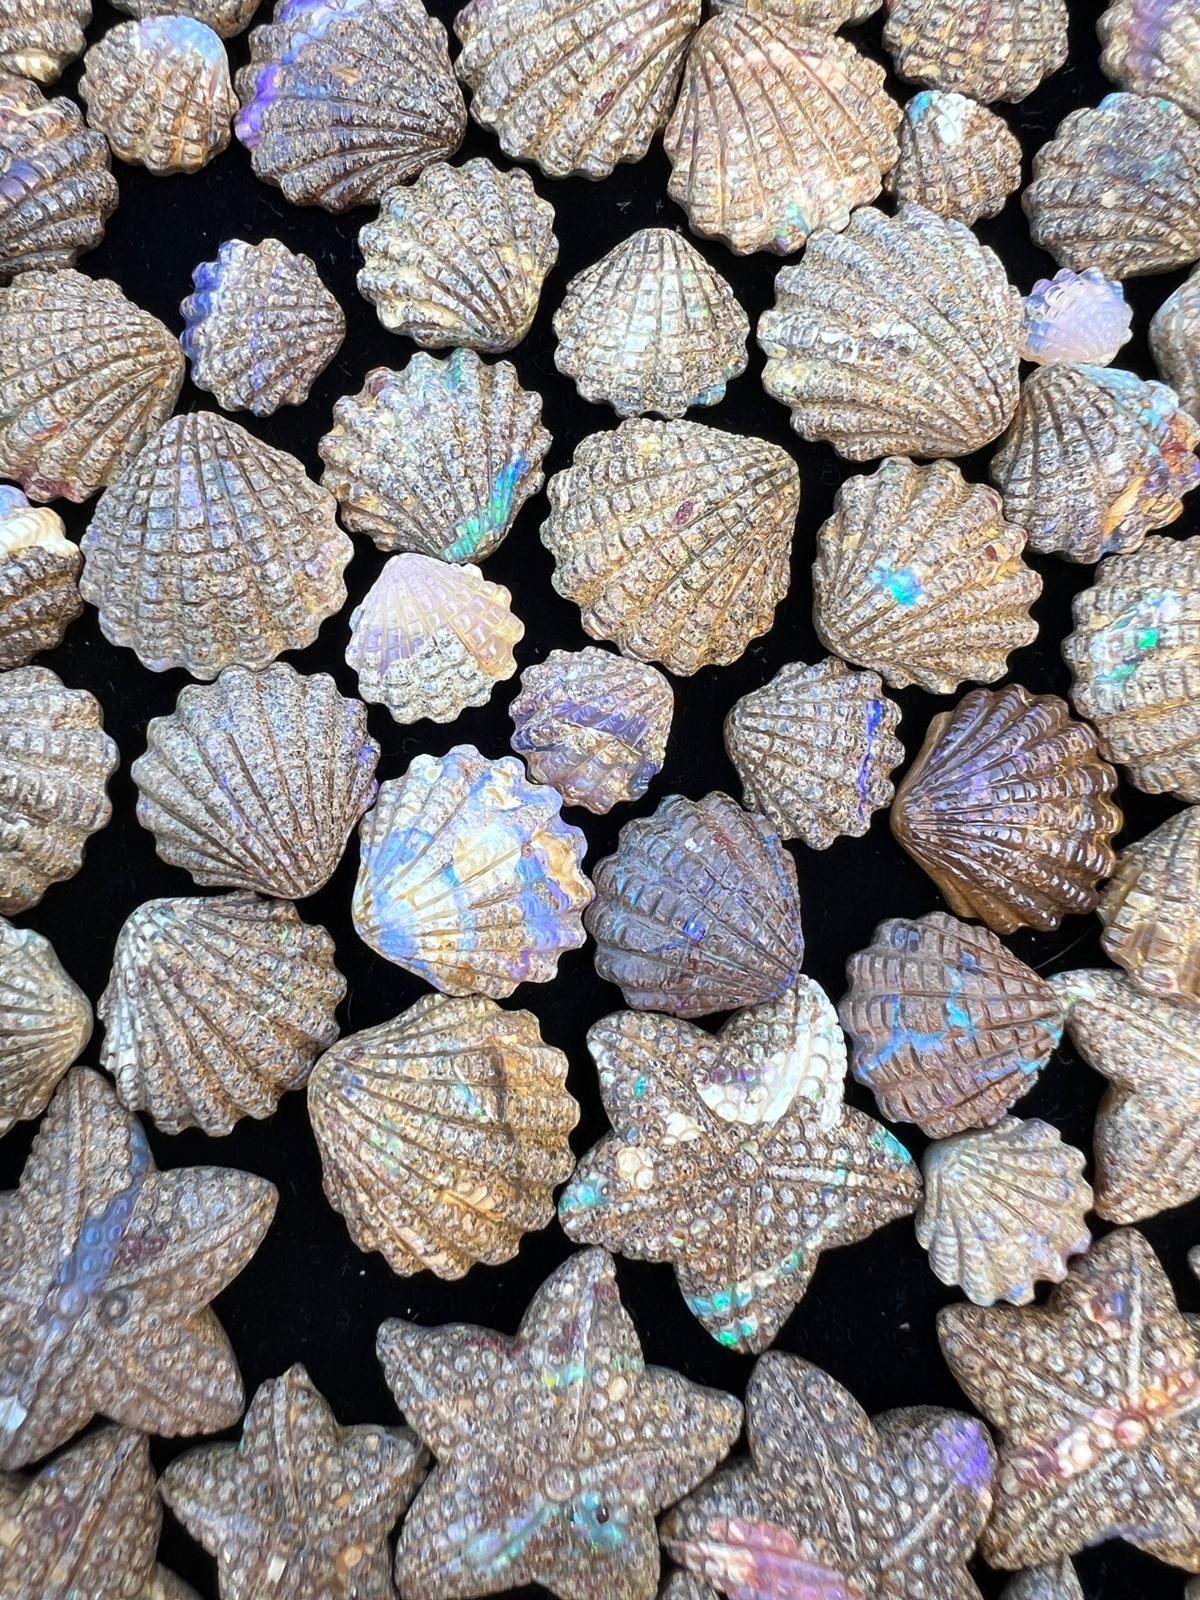 Exquisite 11.61 Ct Australian Boulder Opal Matrix Scallop Shell Carving